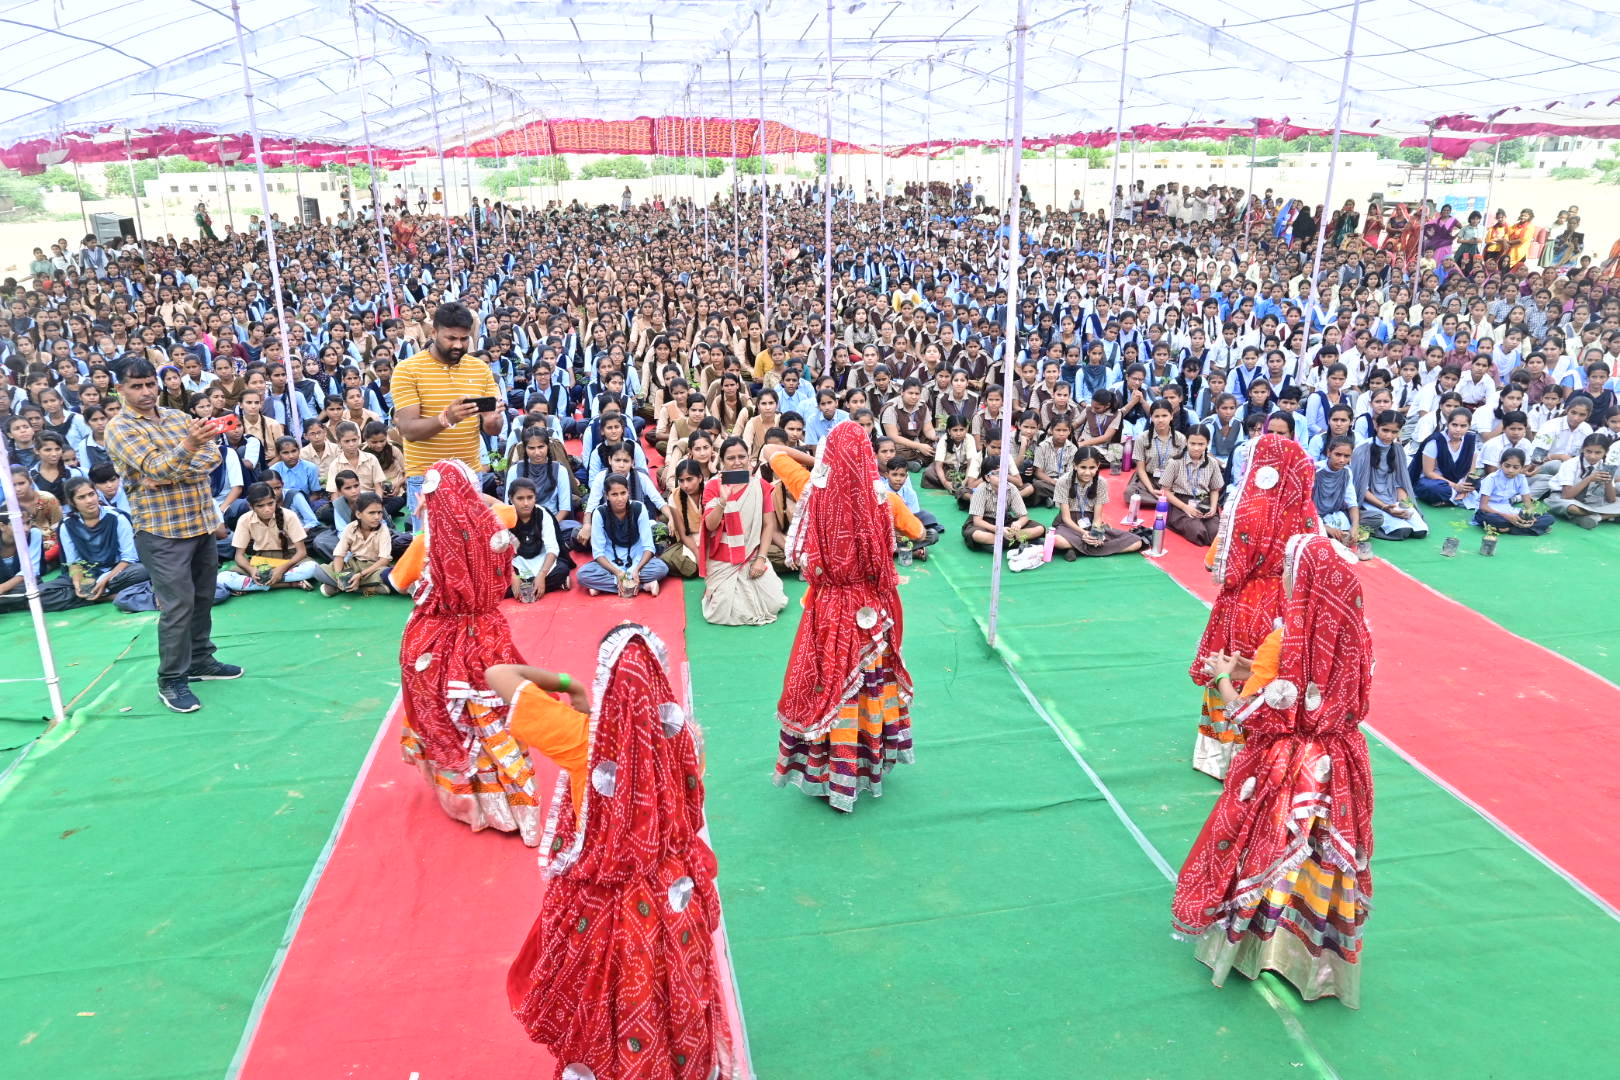 Bikaner celebrates Girl Child Day with 60,000 moringa saplings given to school girls